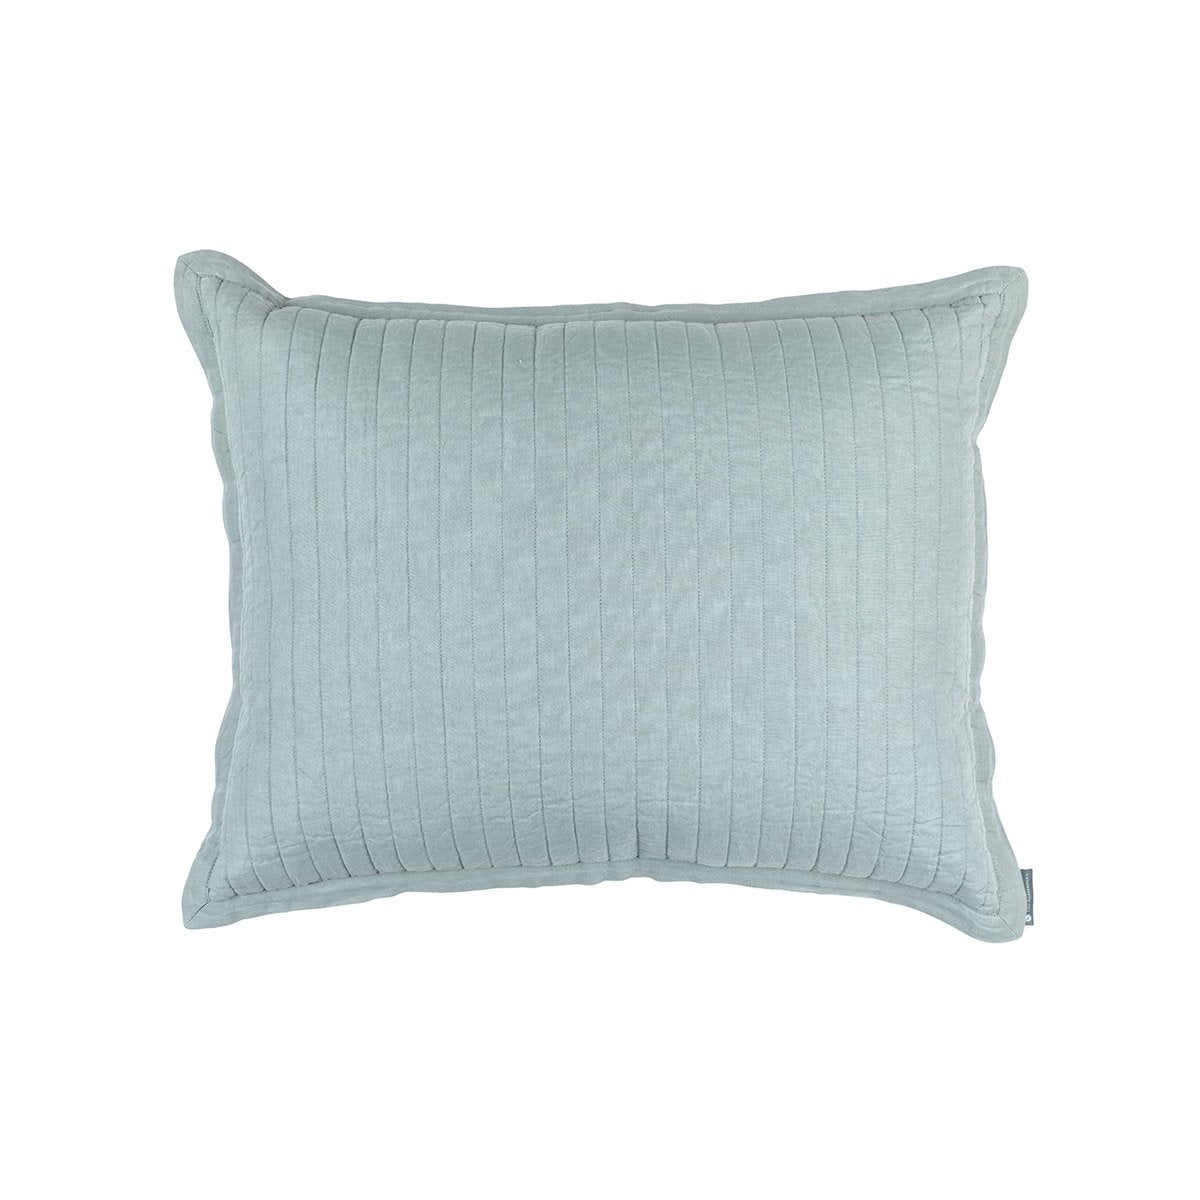 Fig Linens - Lili Alessandra Bedding - Tessa Sky Quilted Standard Pillow